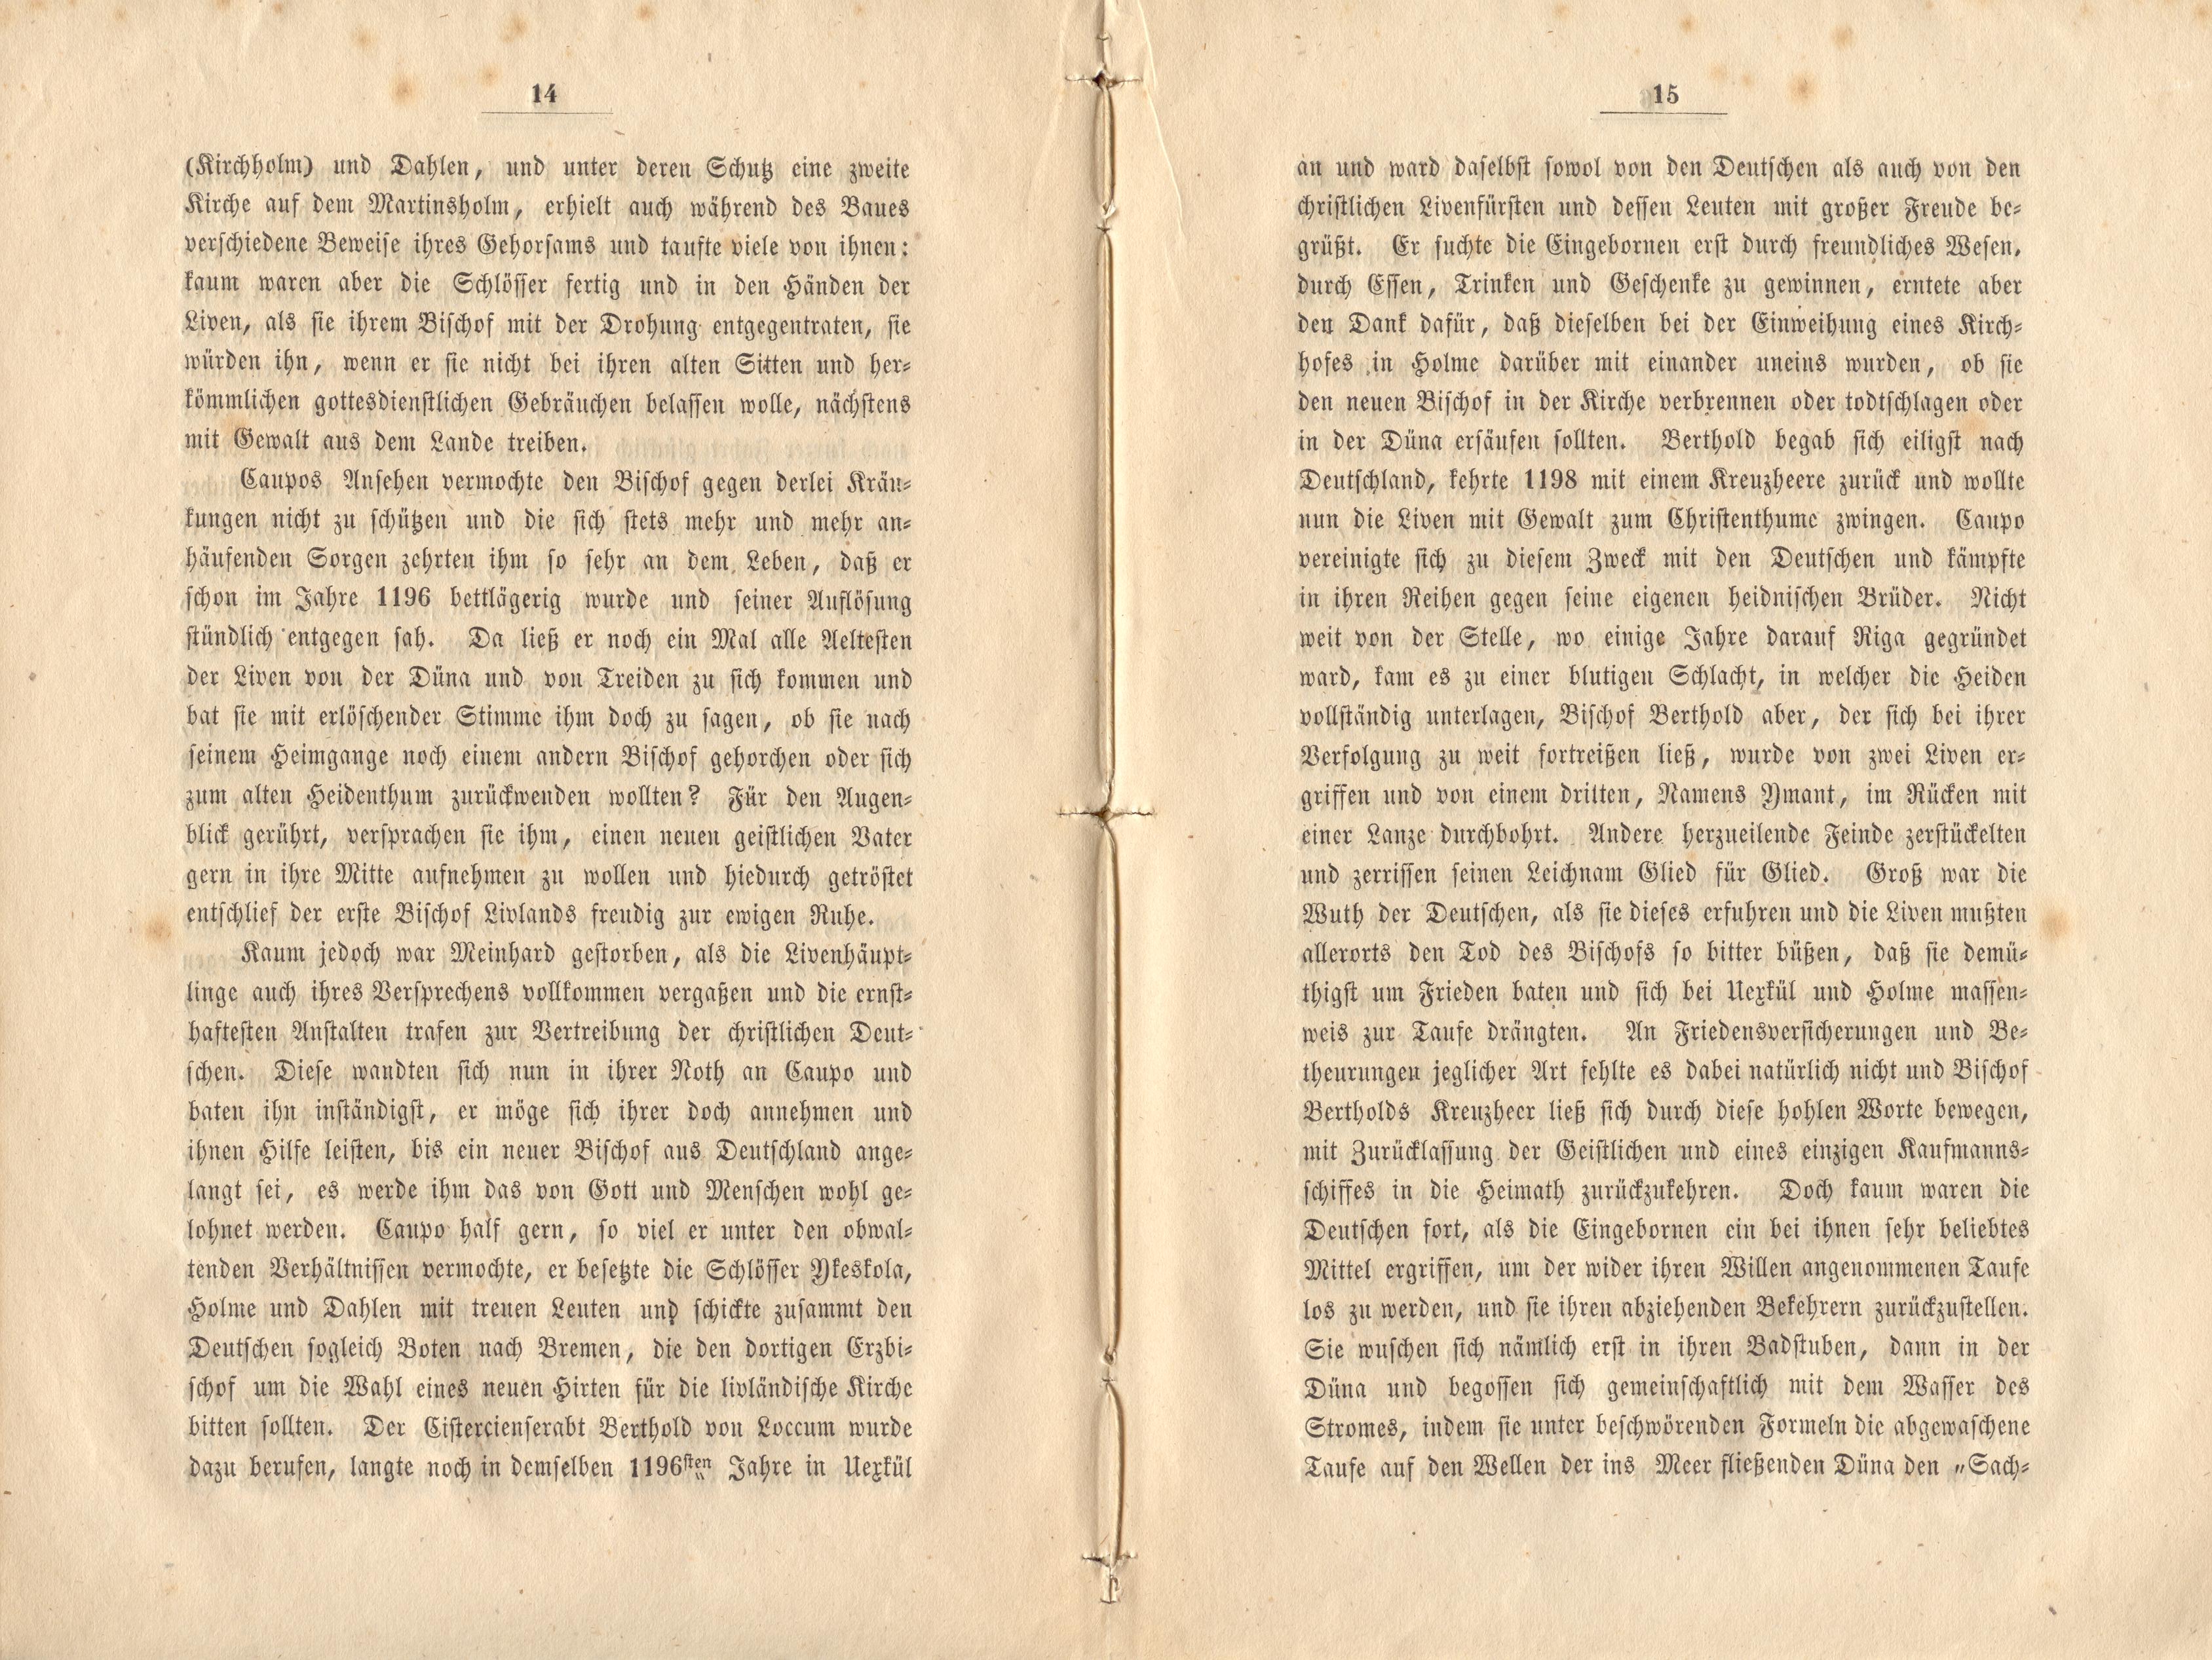 Felliner Blätter (1859) | 8. (14-15) Основной текст